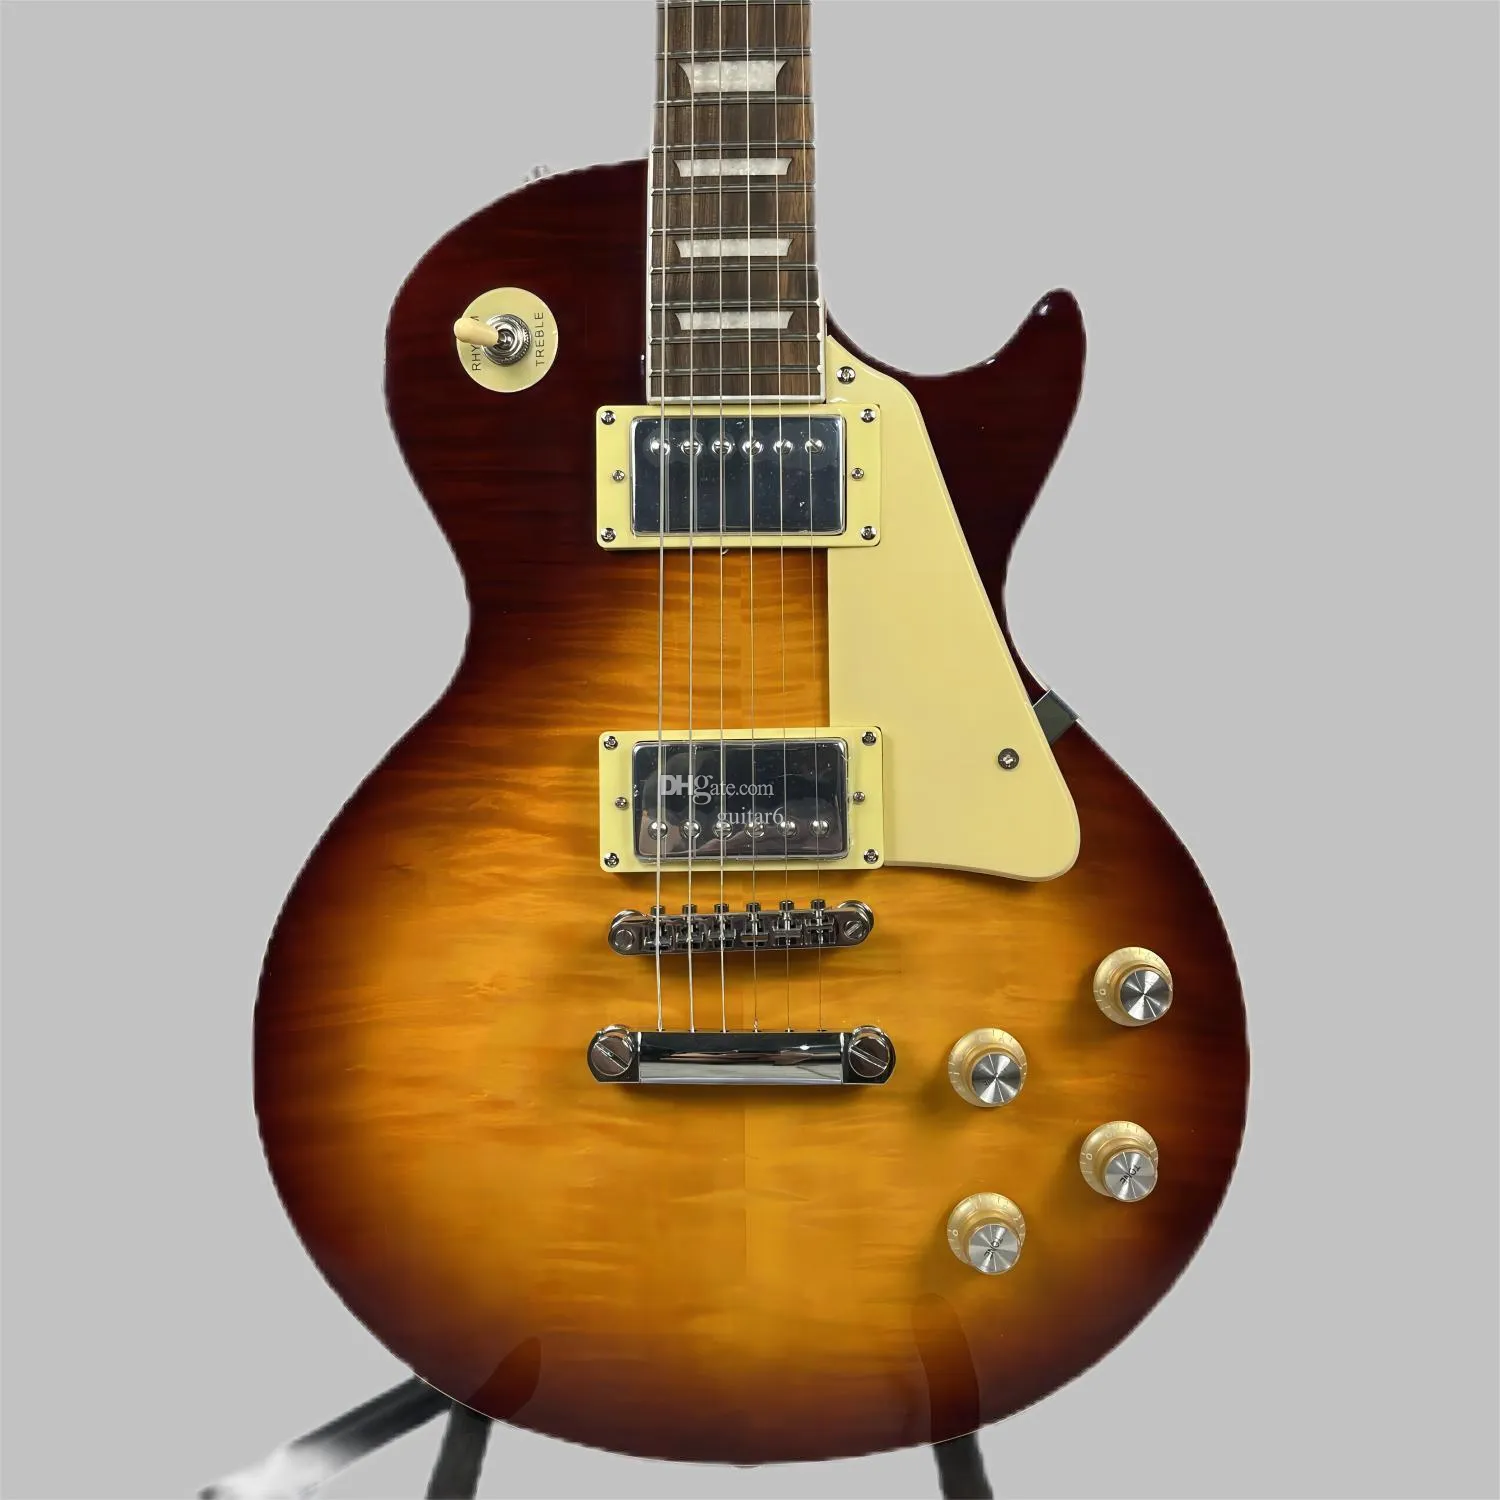 Sunset Color Electric Guitar, Flame Maple Appiazzera, Accessori hardware cromati Protezione, Factory Custom 258